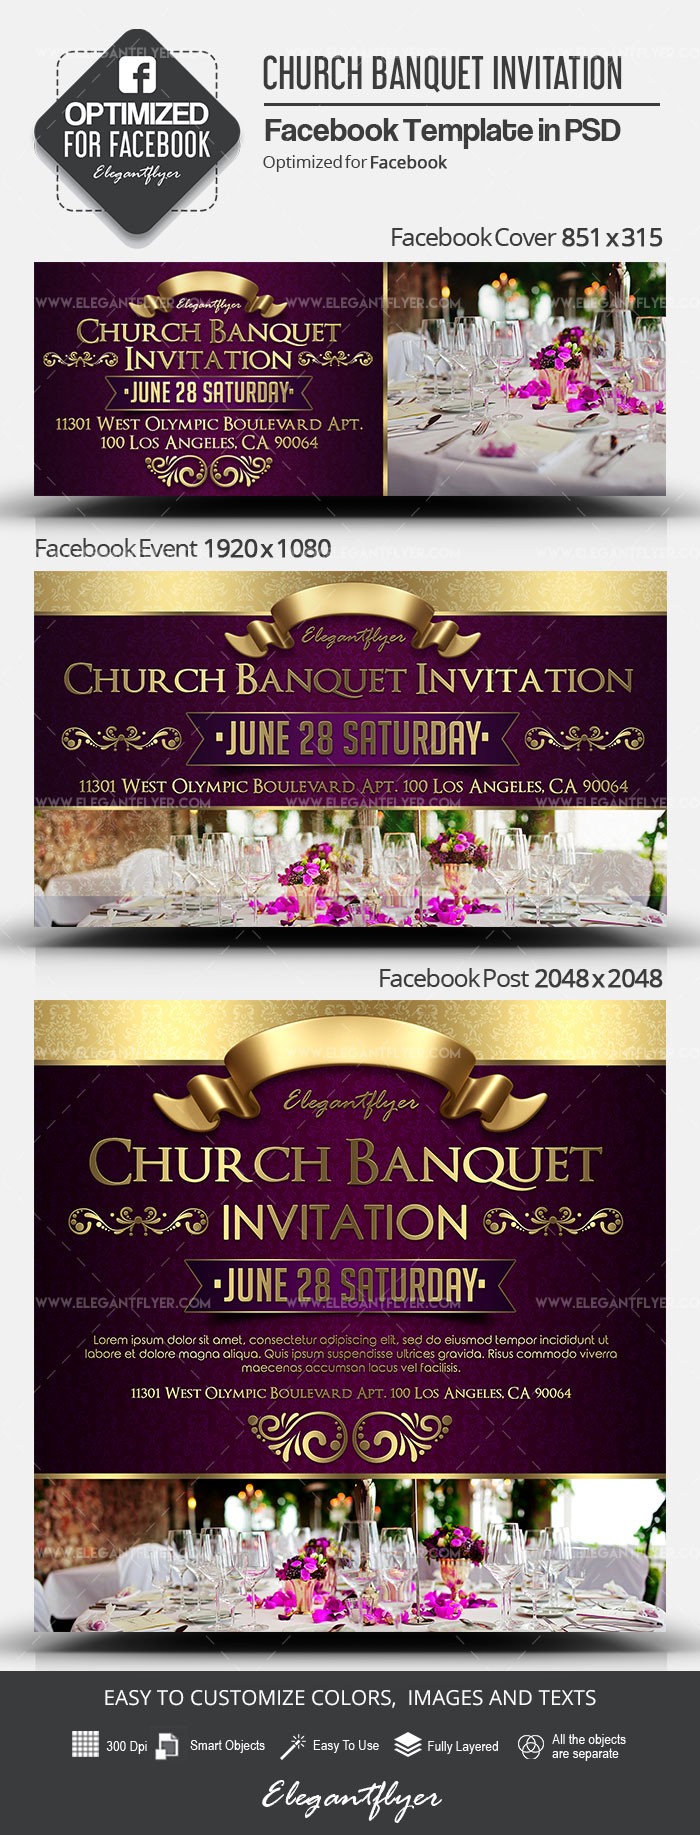 Convite de Banquete da Igreja no Facebook by ElegantFlyer